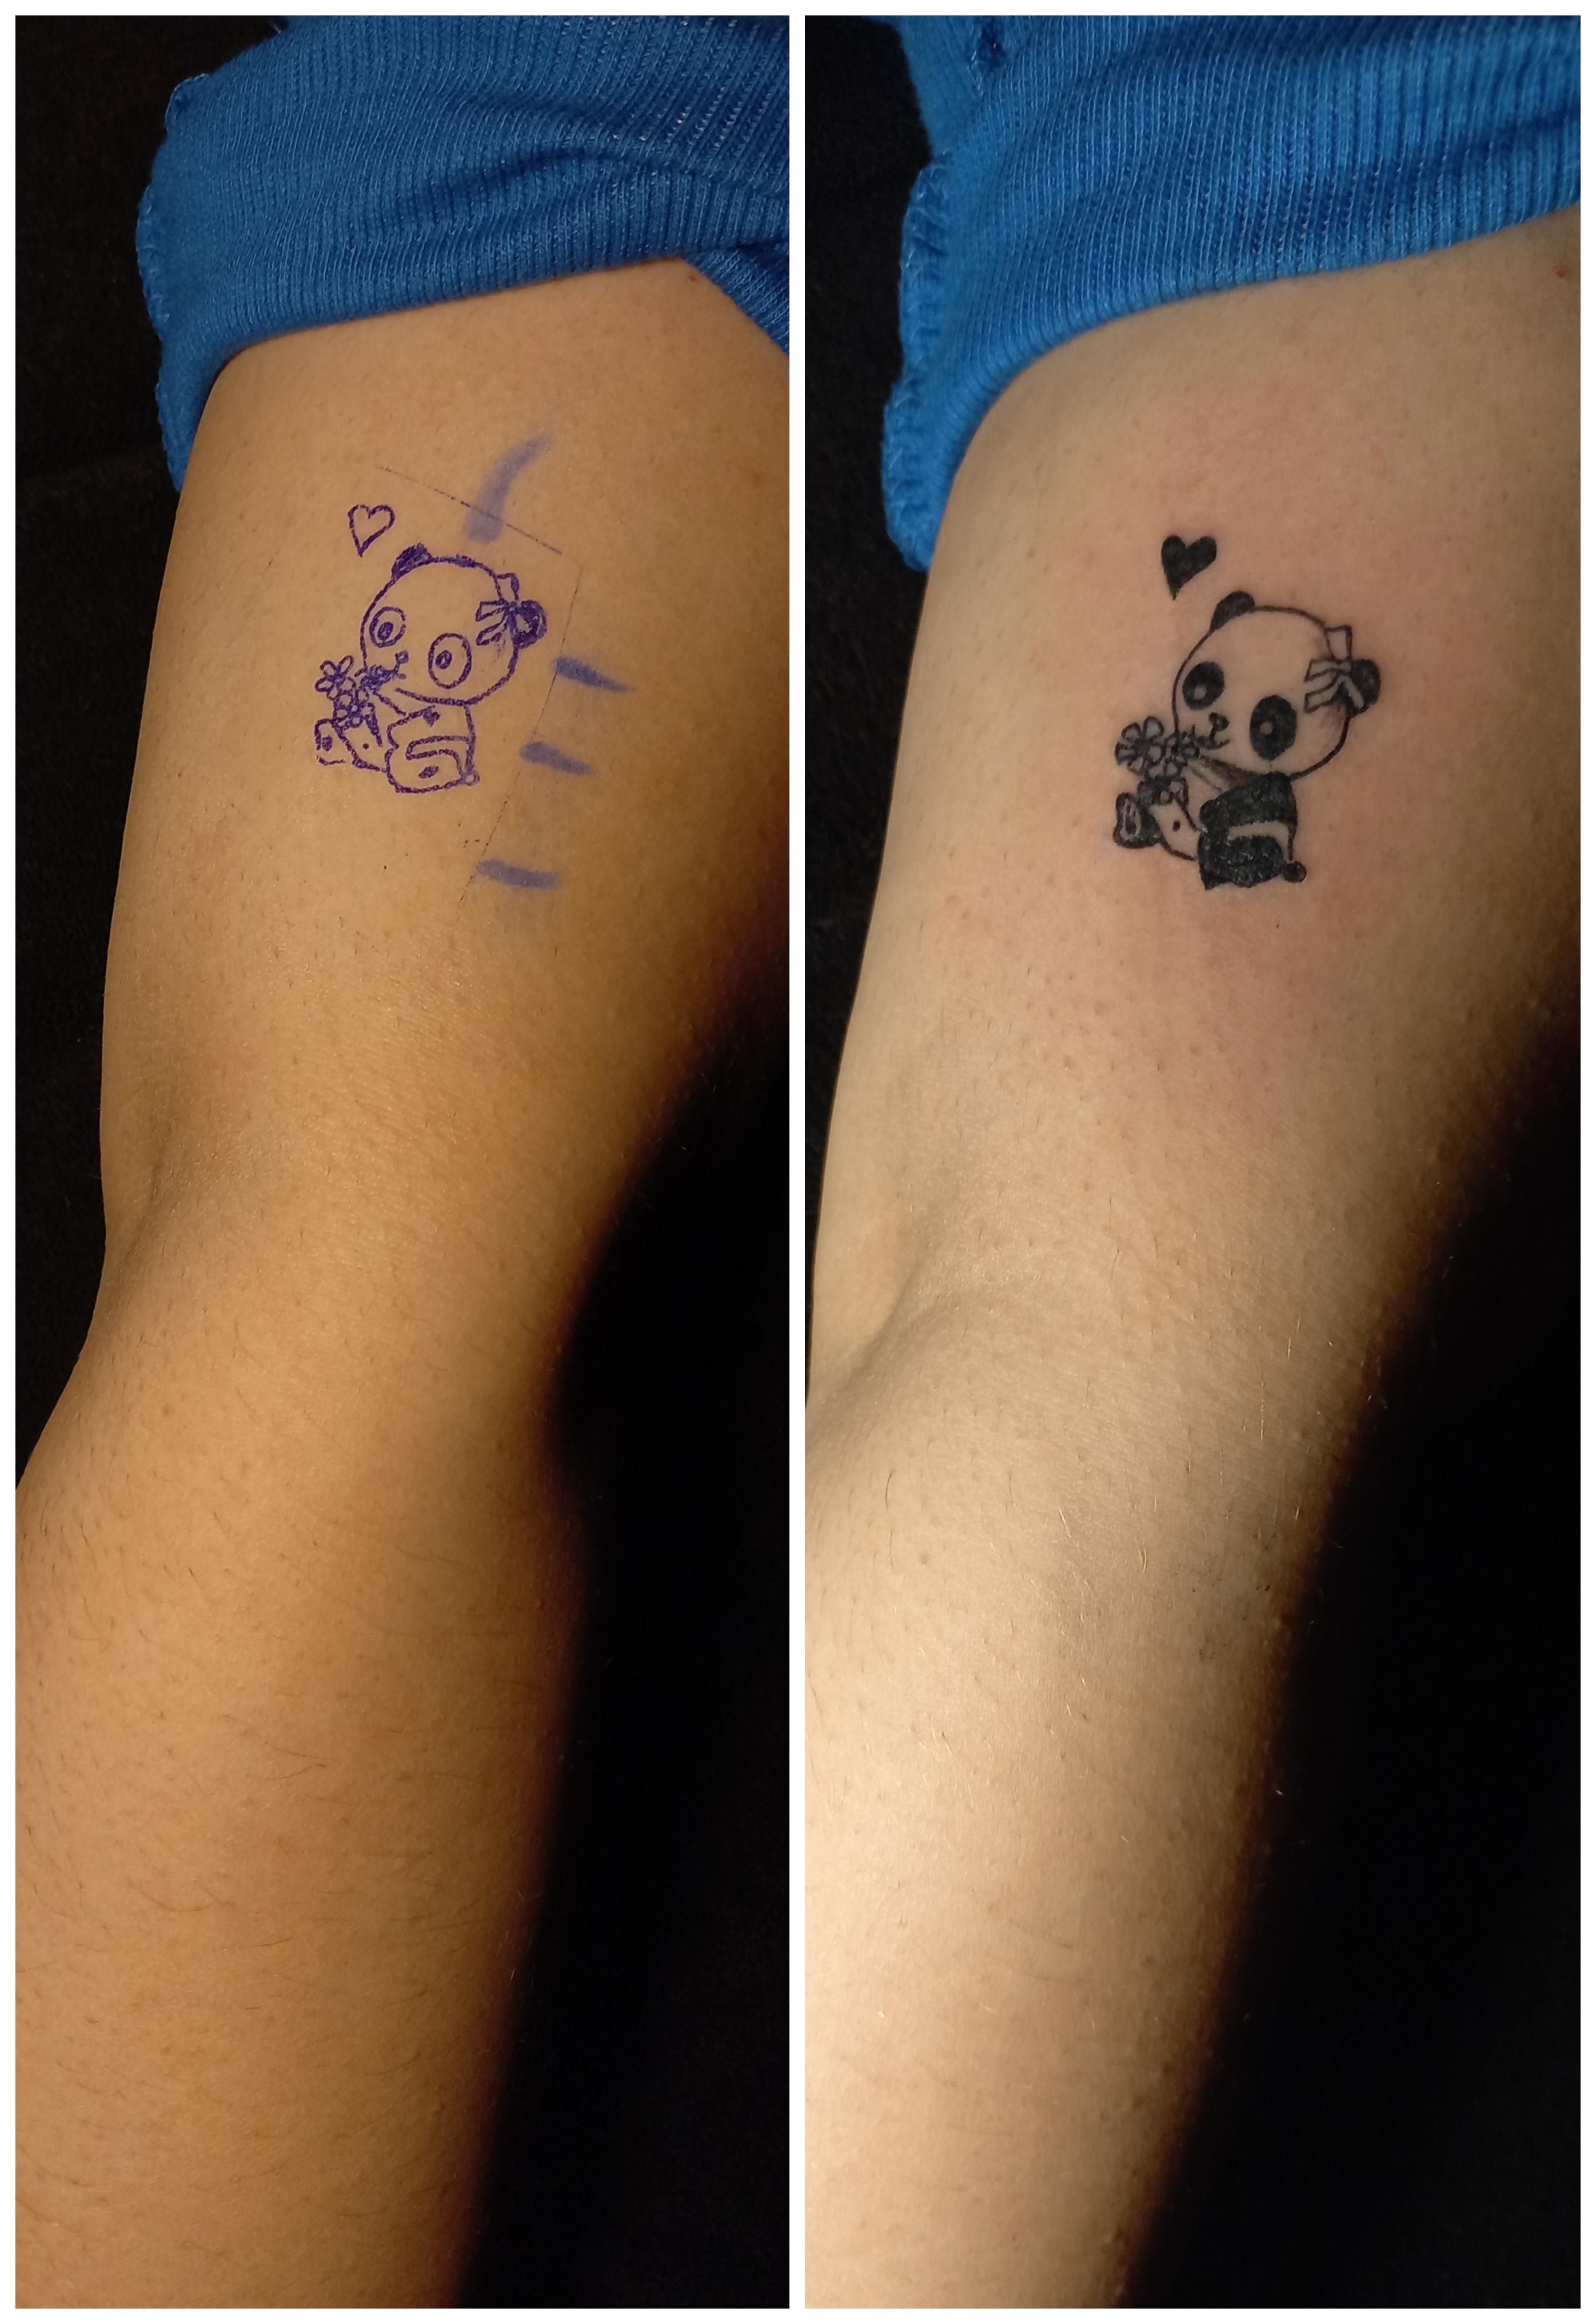 Tattoo uploaded by Vipul Chaudhary • Panda tattoo |Panda tattoo design |Panda  tattoo ideas |tattoo for girls • Tattoodo